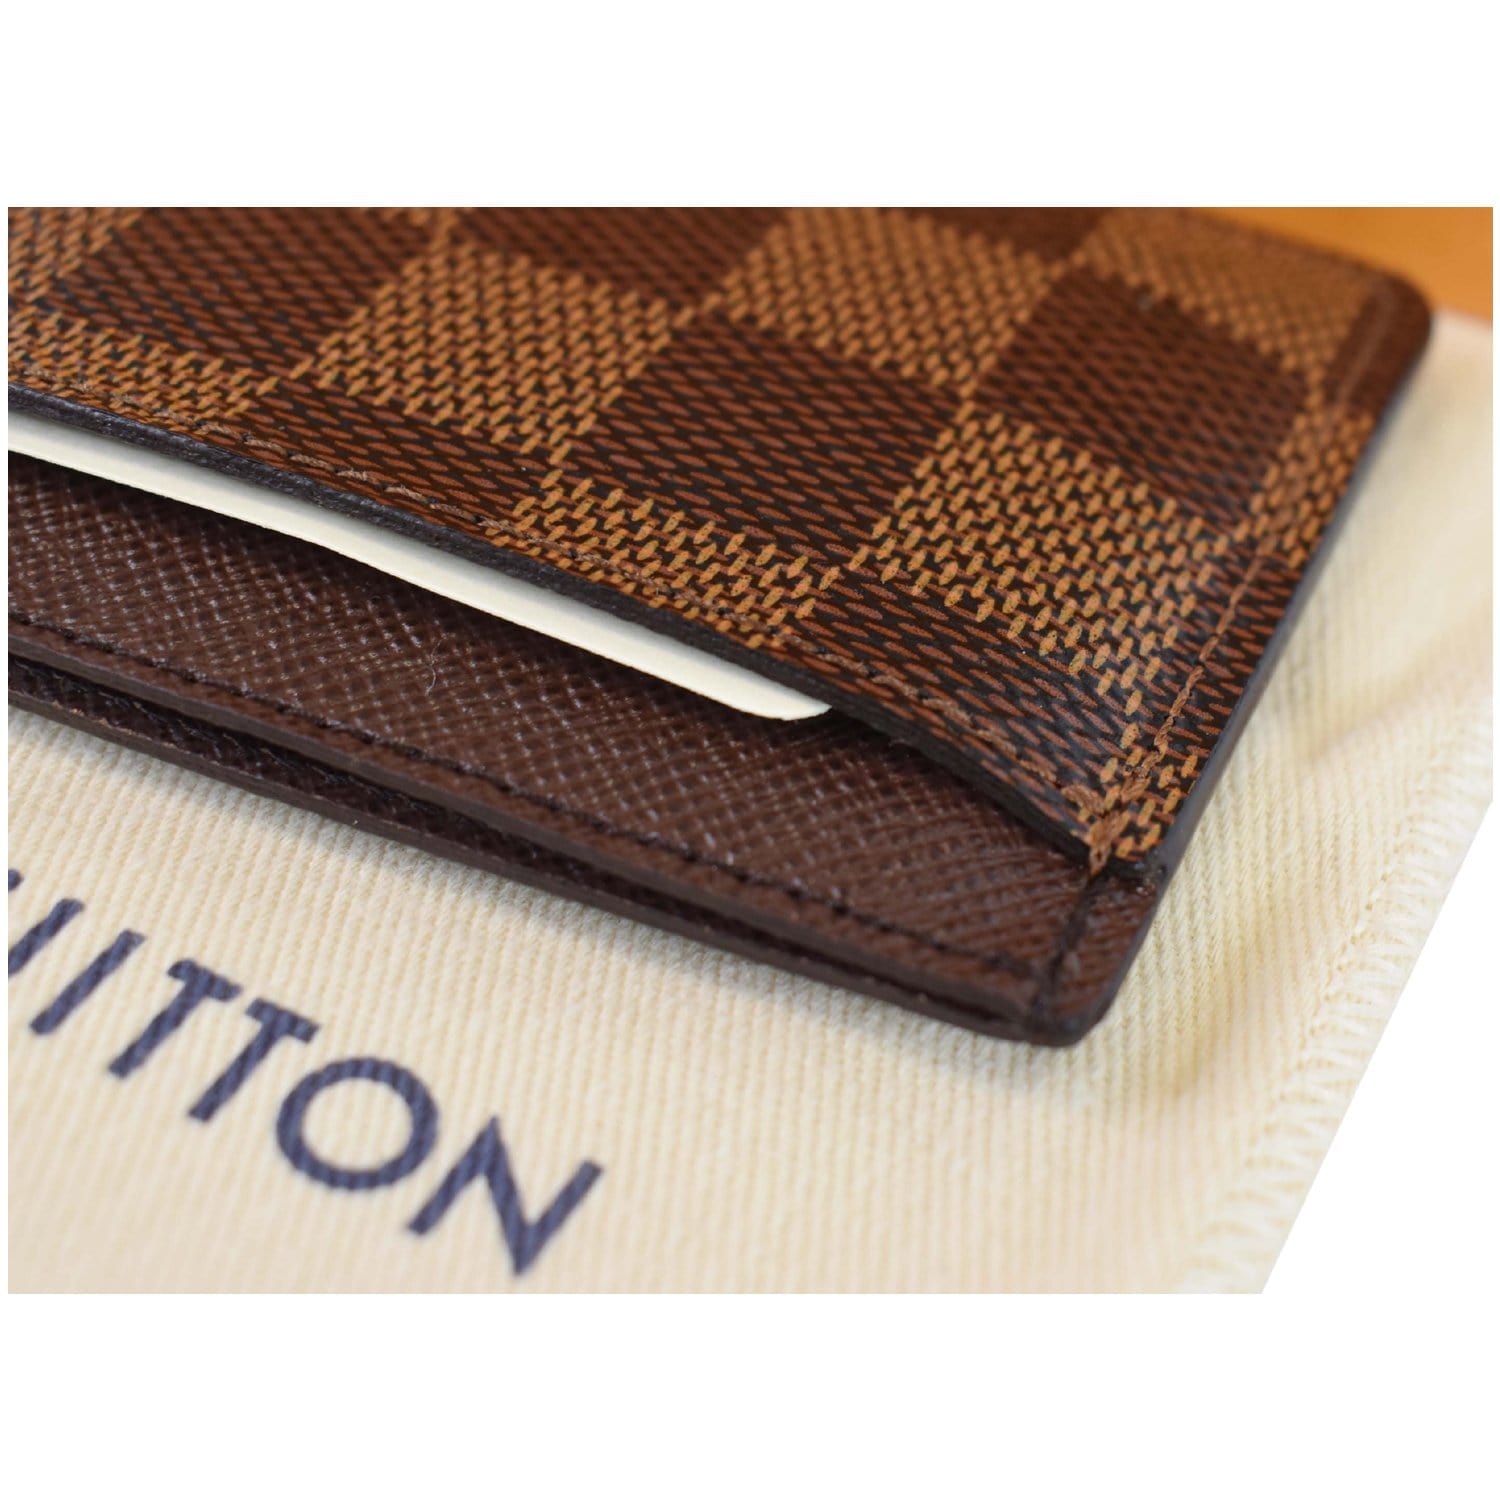 Louis Vuitton Damier Ebene Business Card Holder - A World Of Goods For You,  LLC